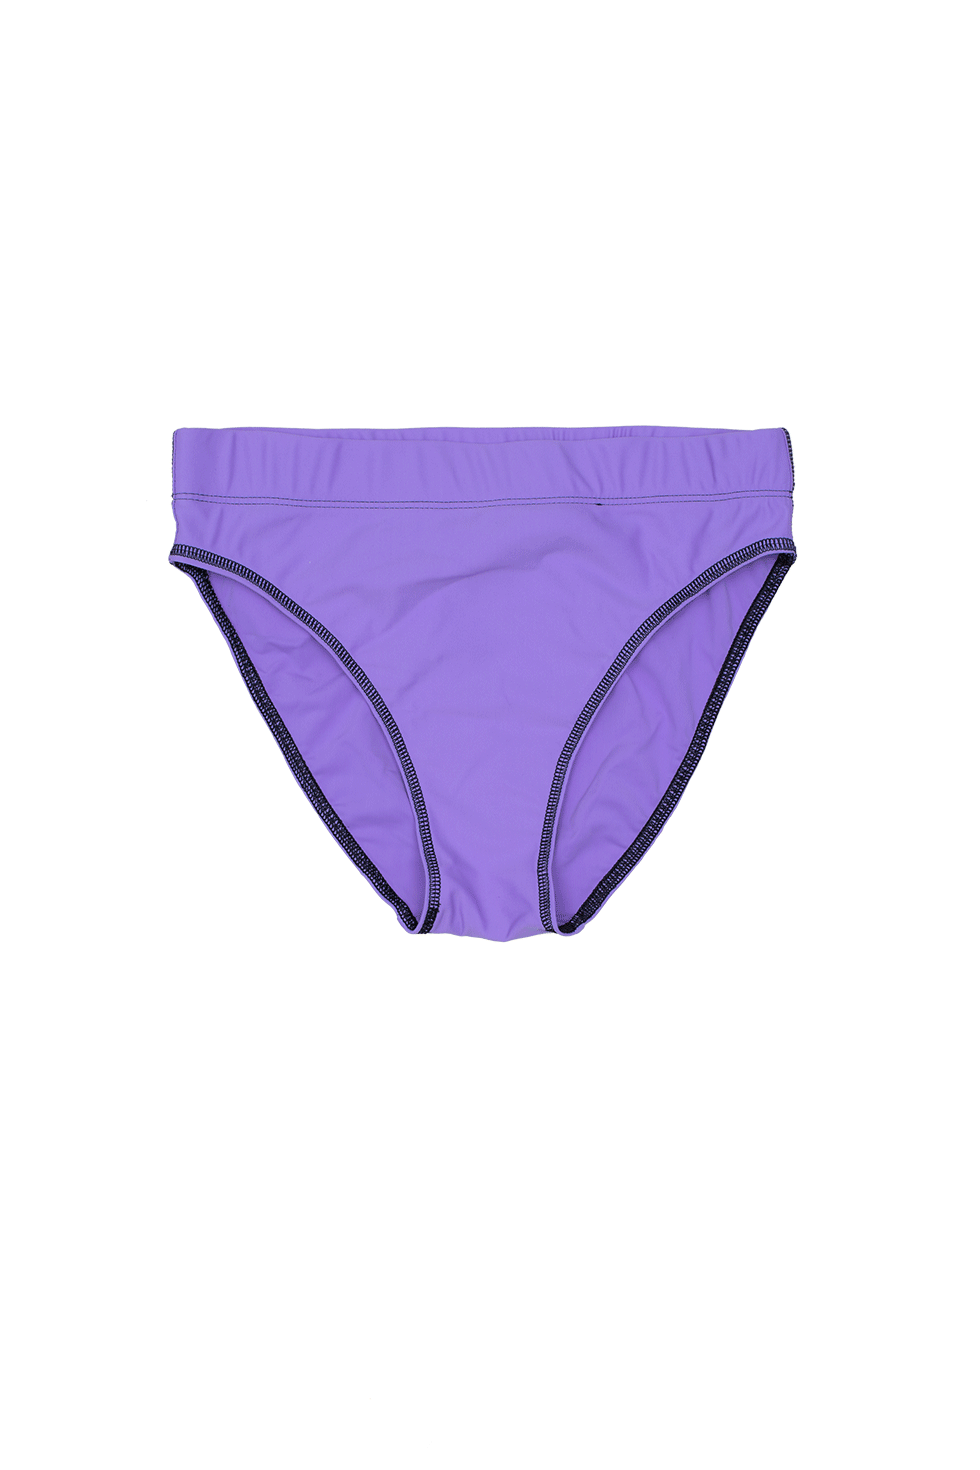 violet cheeky bottom